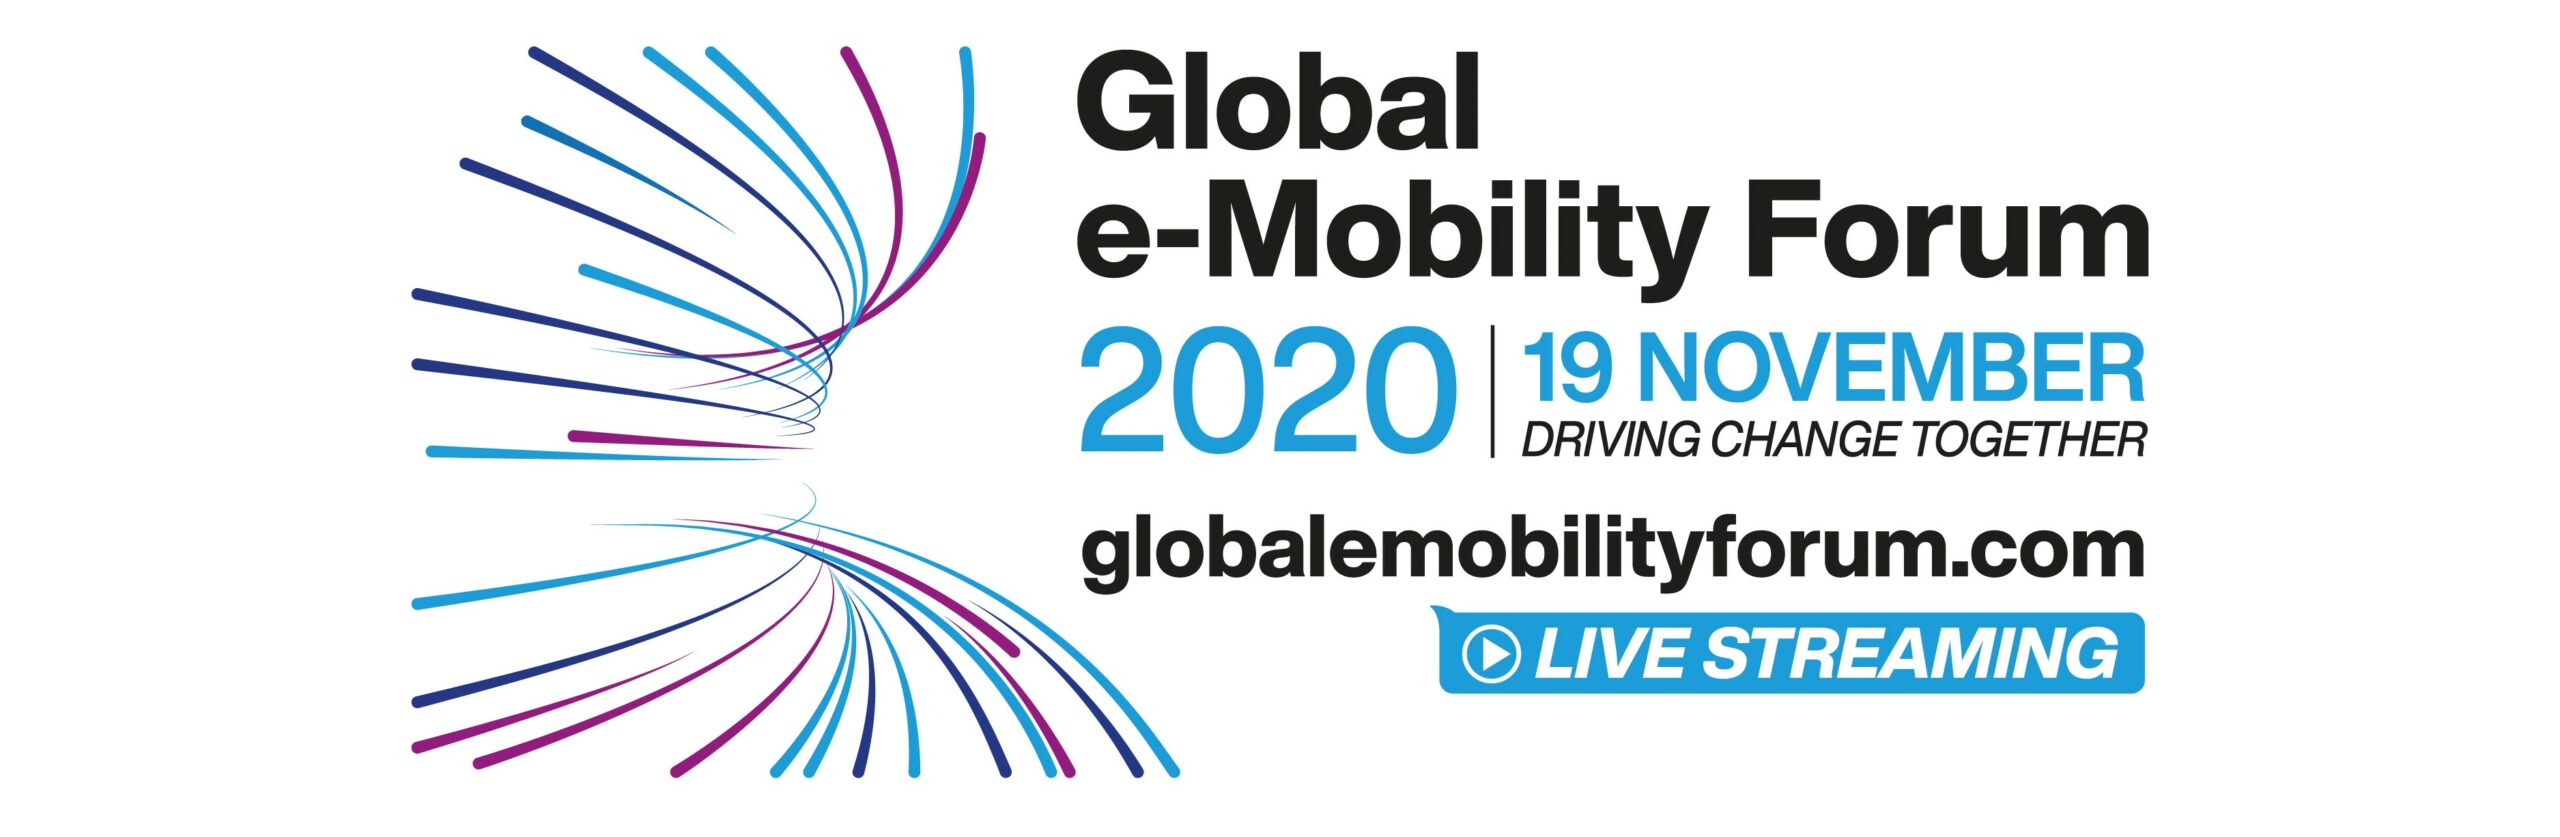 Global e-Mobility Forum 2020 